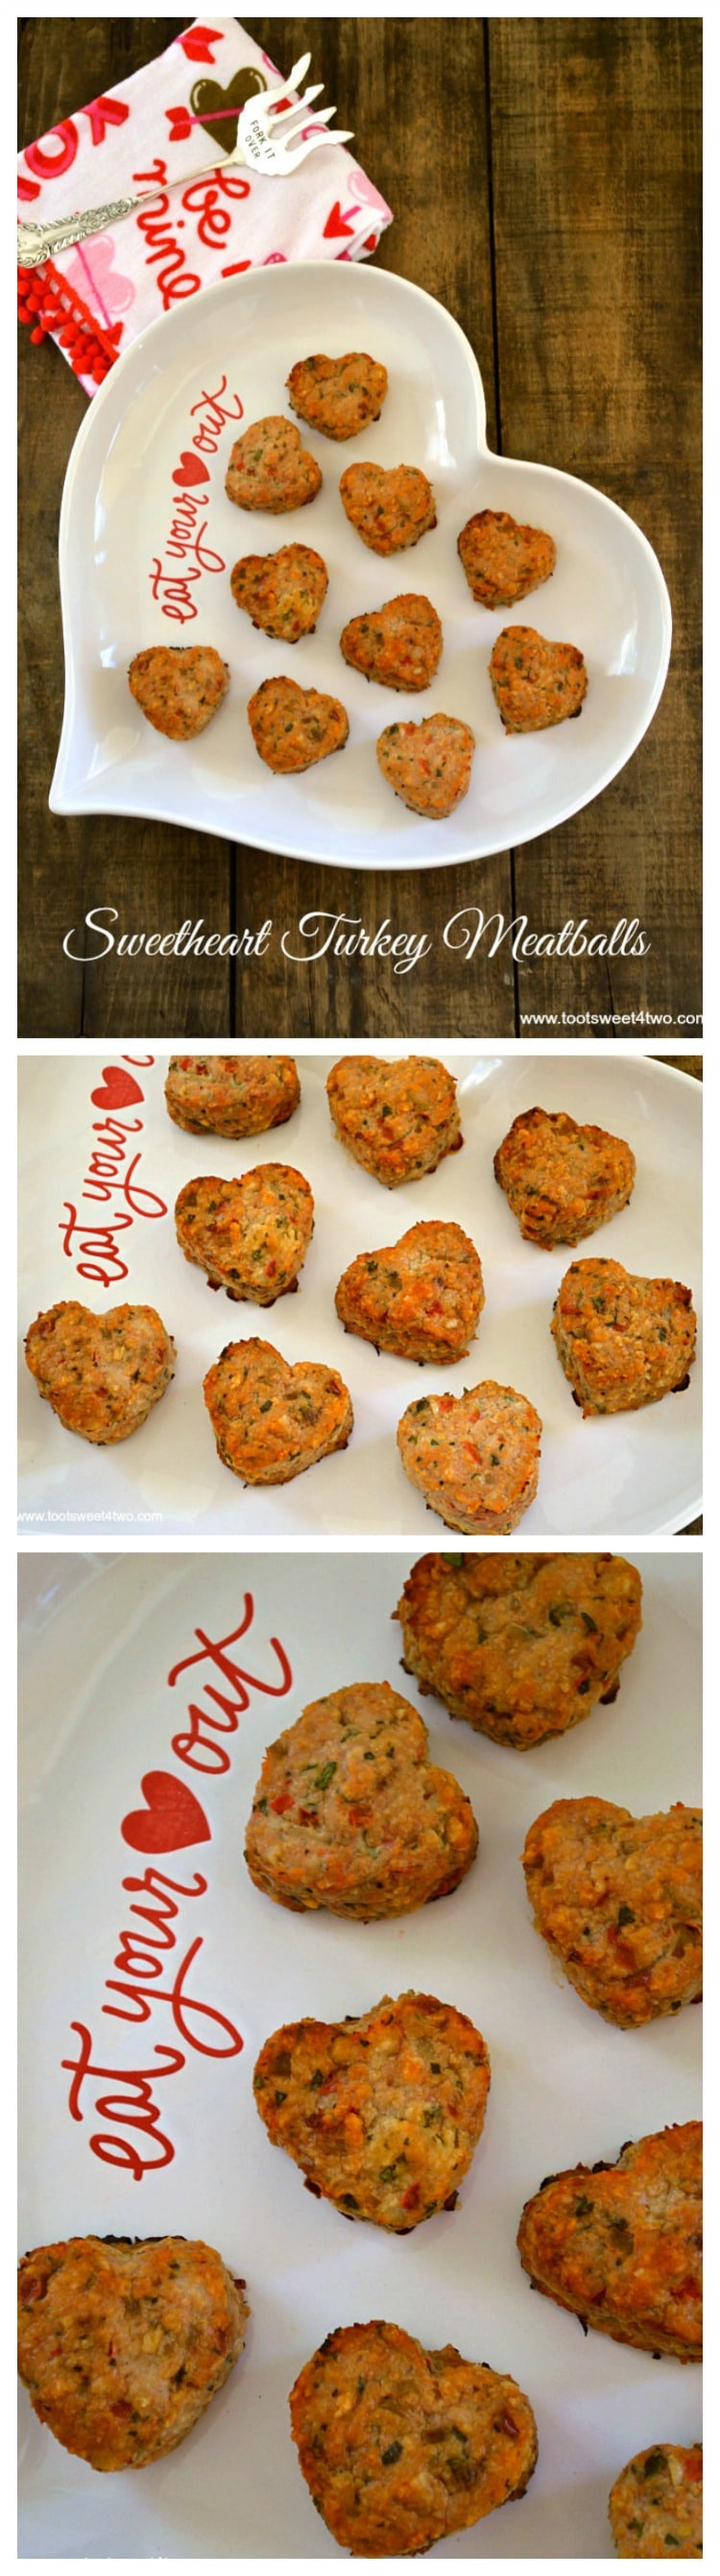 Sweetheart Turkey Meatballs collage